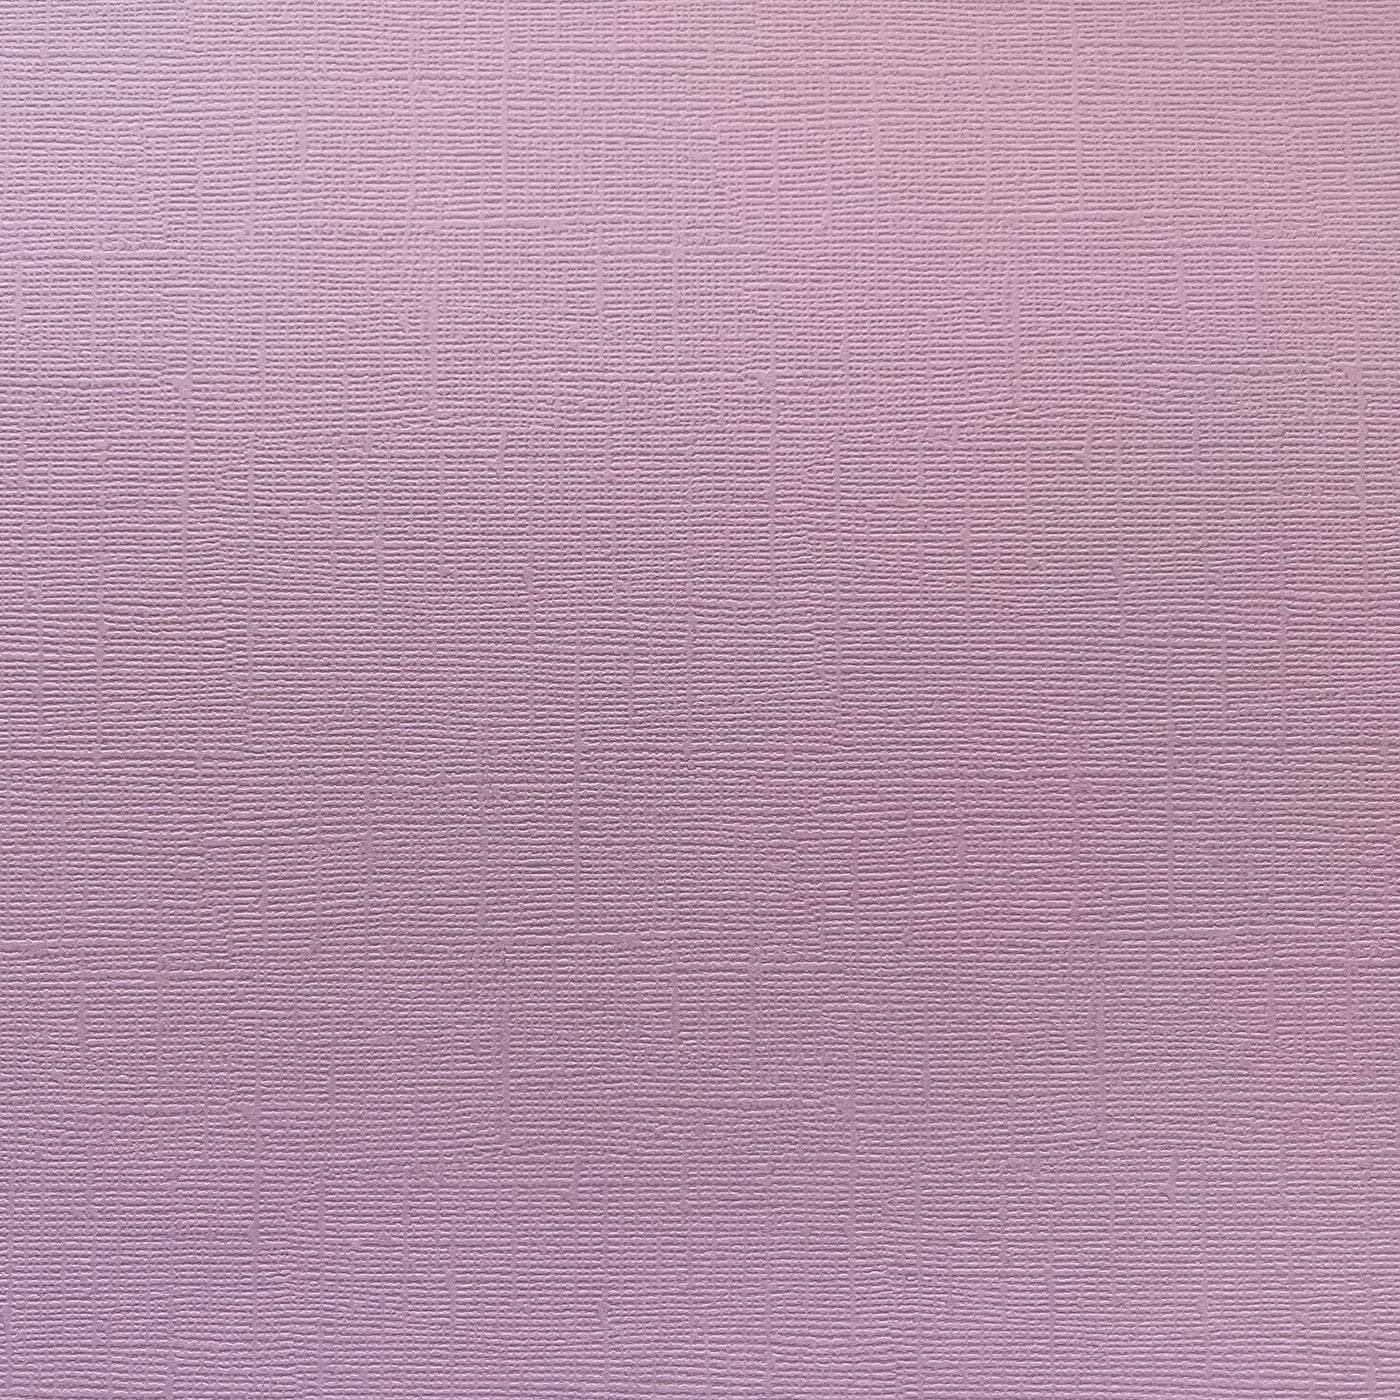 LILAC LACE -Lavender Textured 12x12 Cardstock - Encore Paper